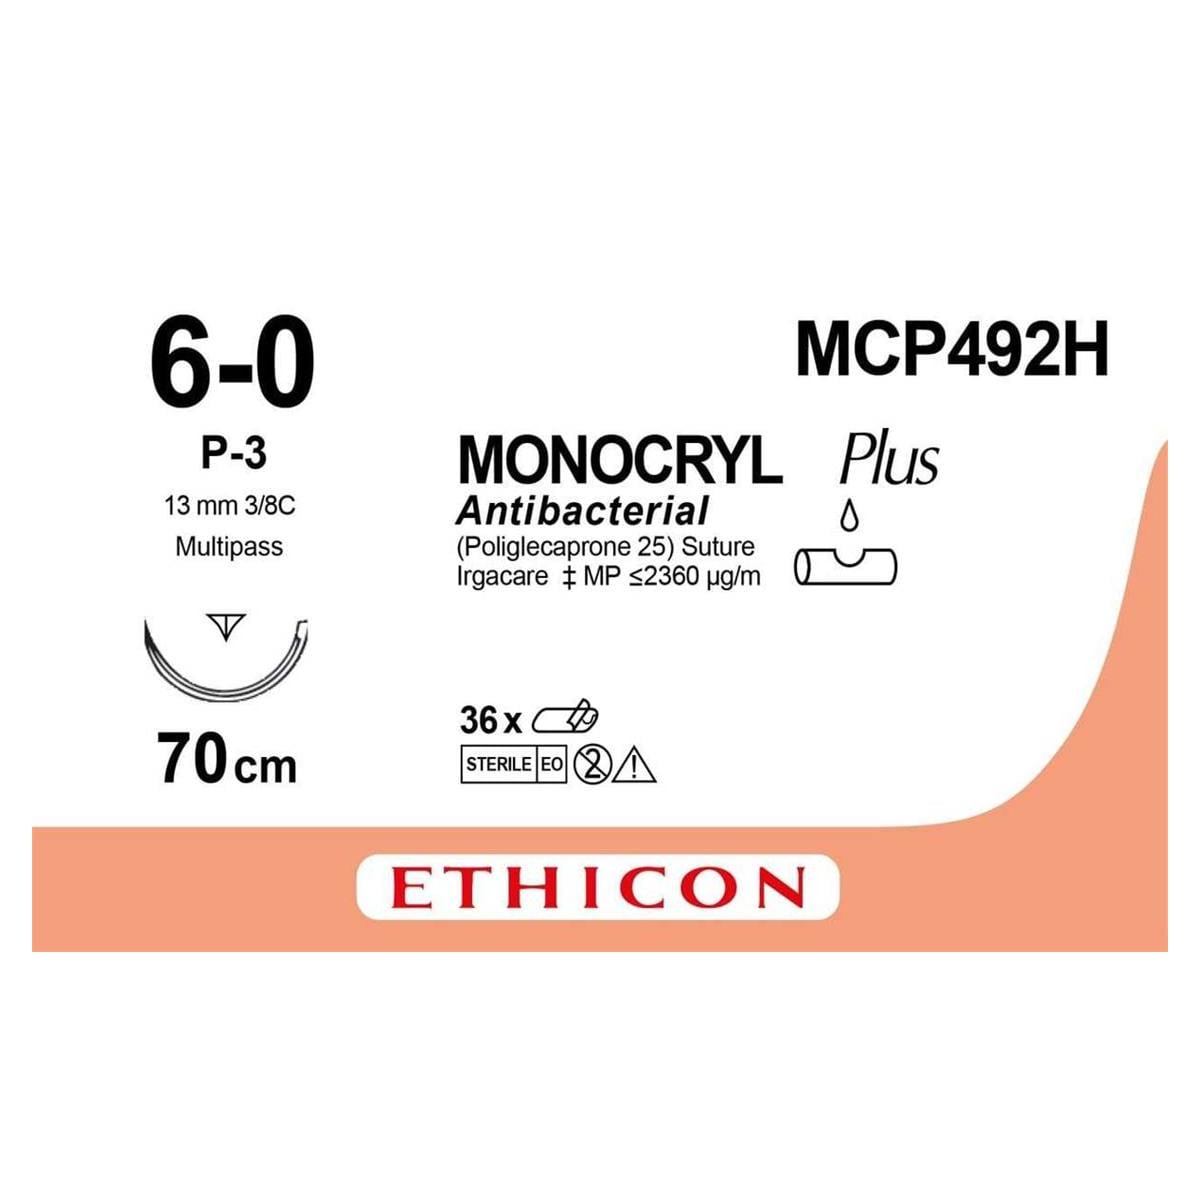 Monocryl Plus - lengte 70cm, 36 stuks 6/0, naald P-3 - MCP492H